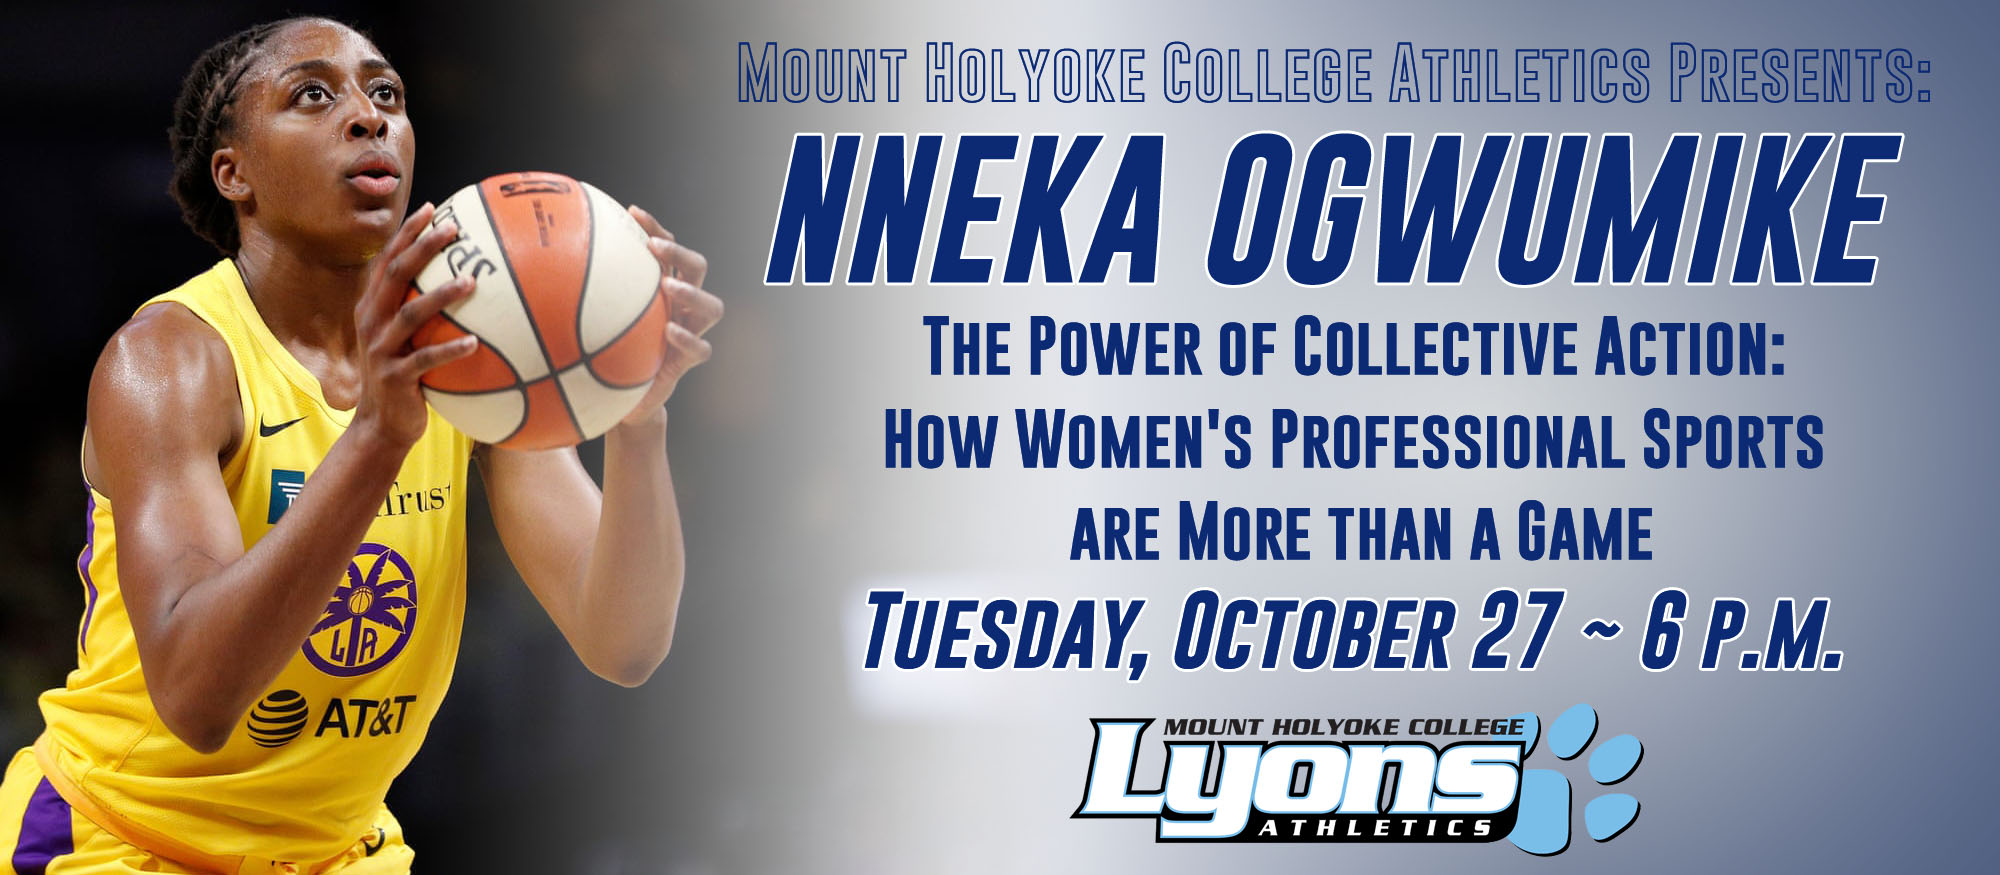 Mount Holyoke College Athletics to Virtually Host WNBA All Star Nneka Ogwunmike on October 27